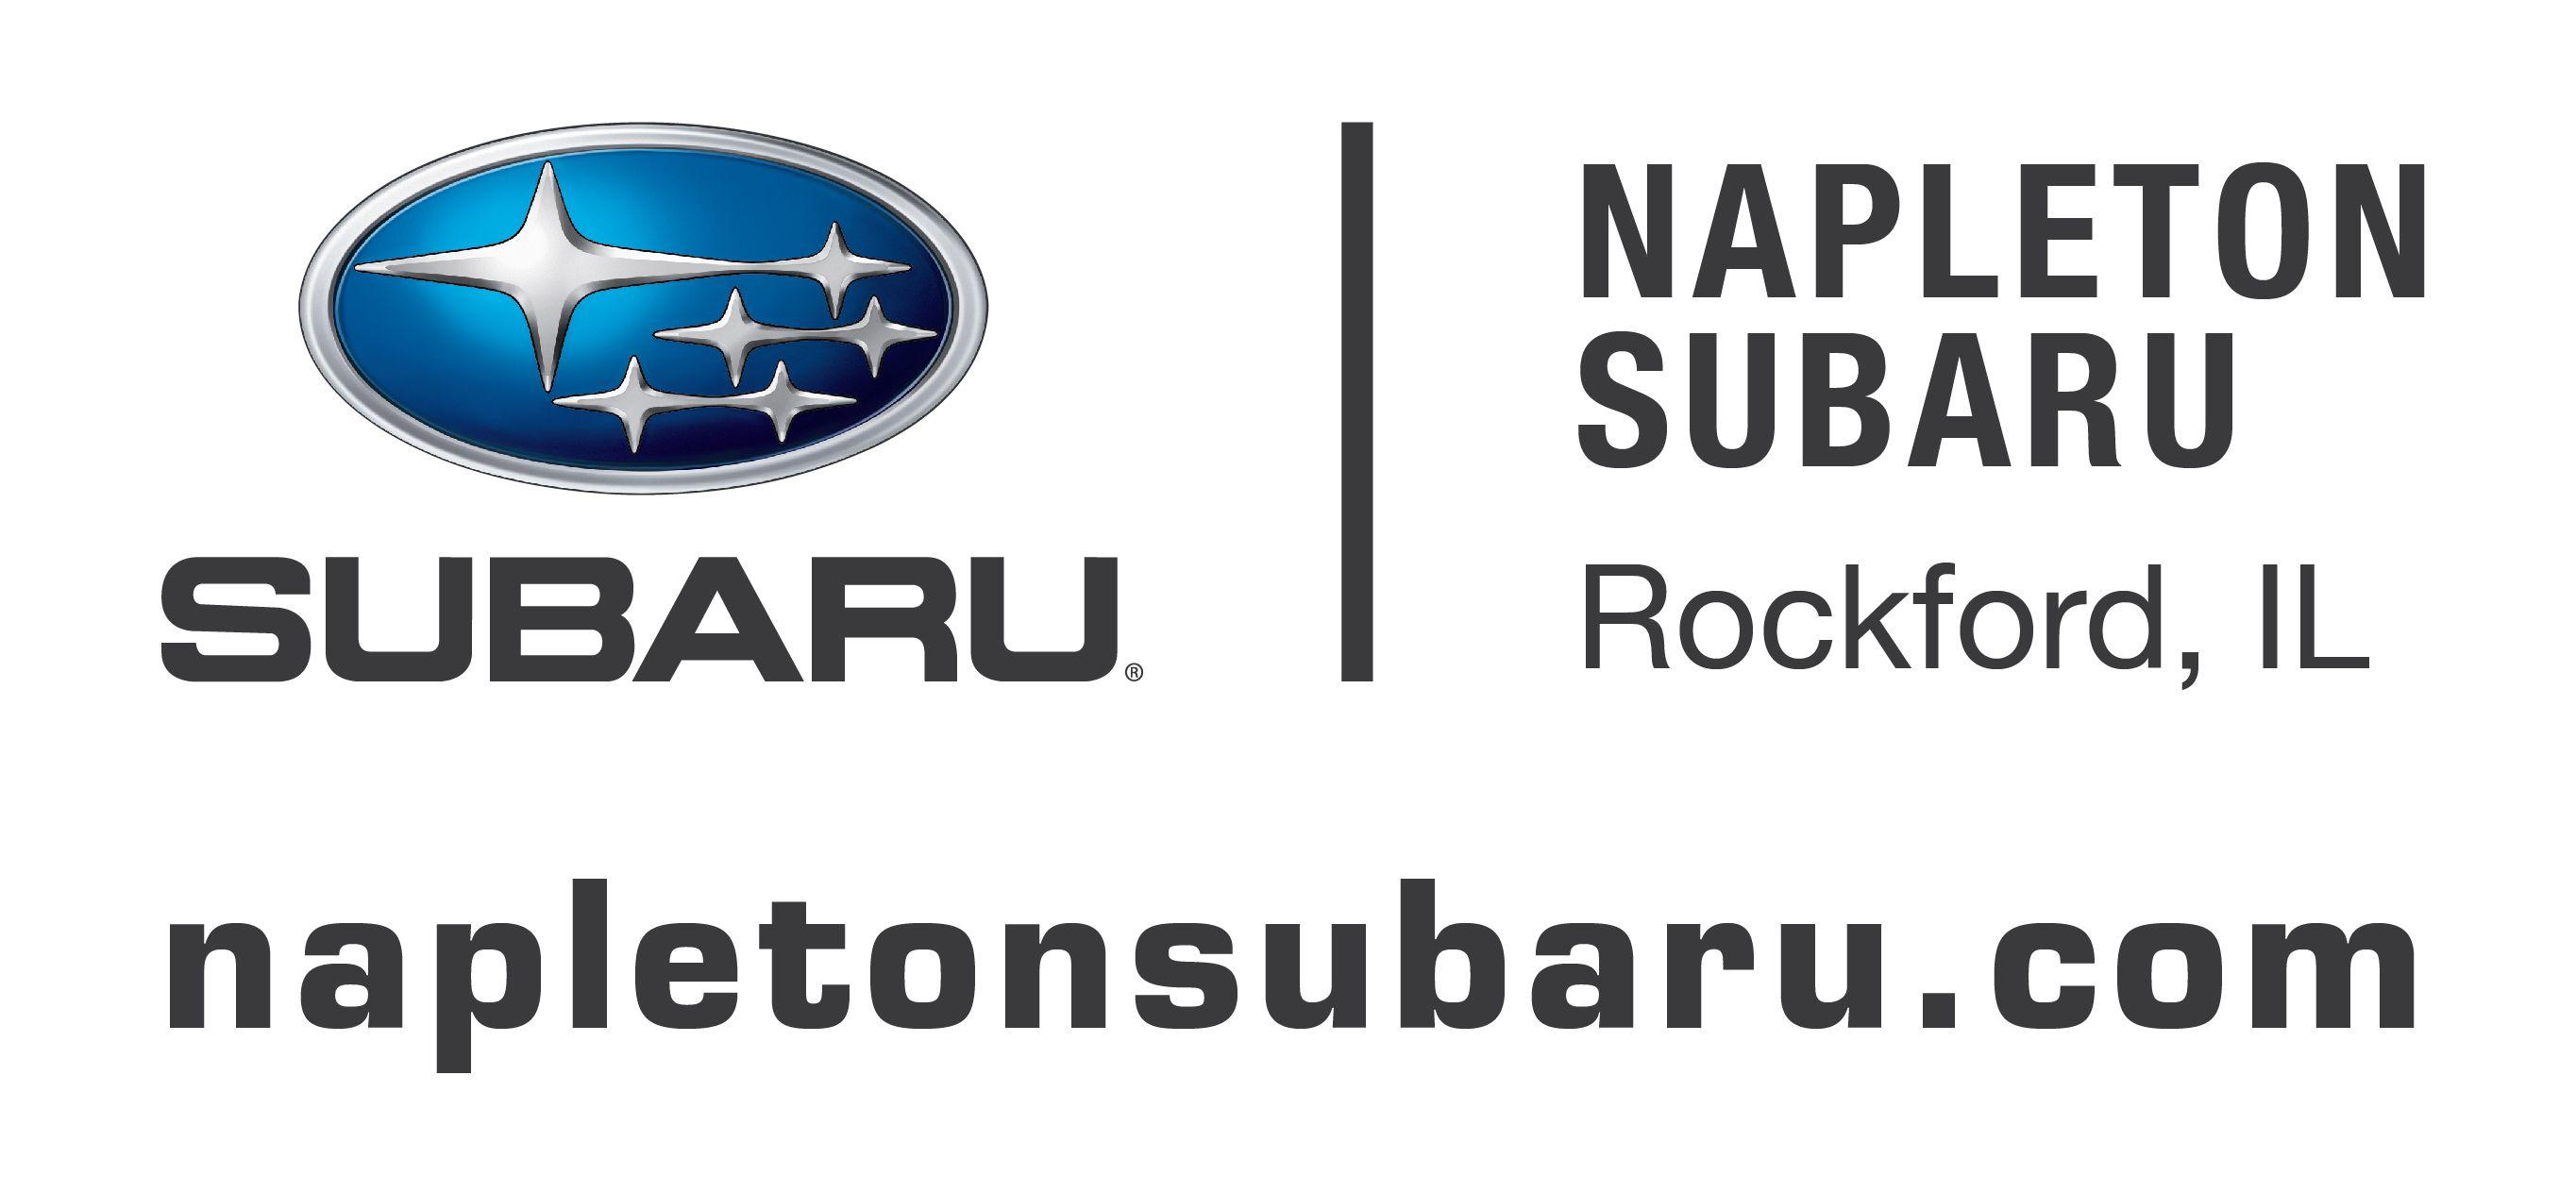 Rockford Logo - Napleton Subaru Rockford Logo 01 Land Institute